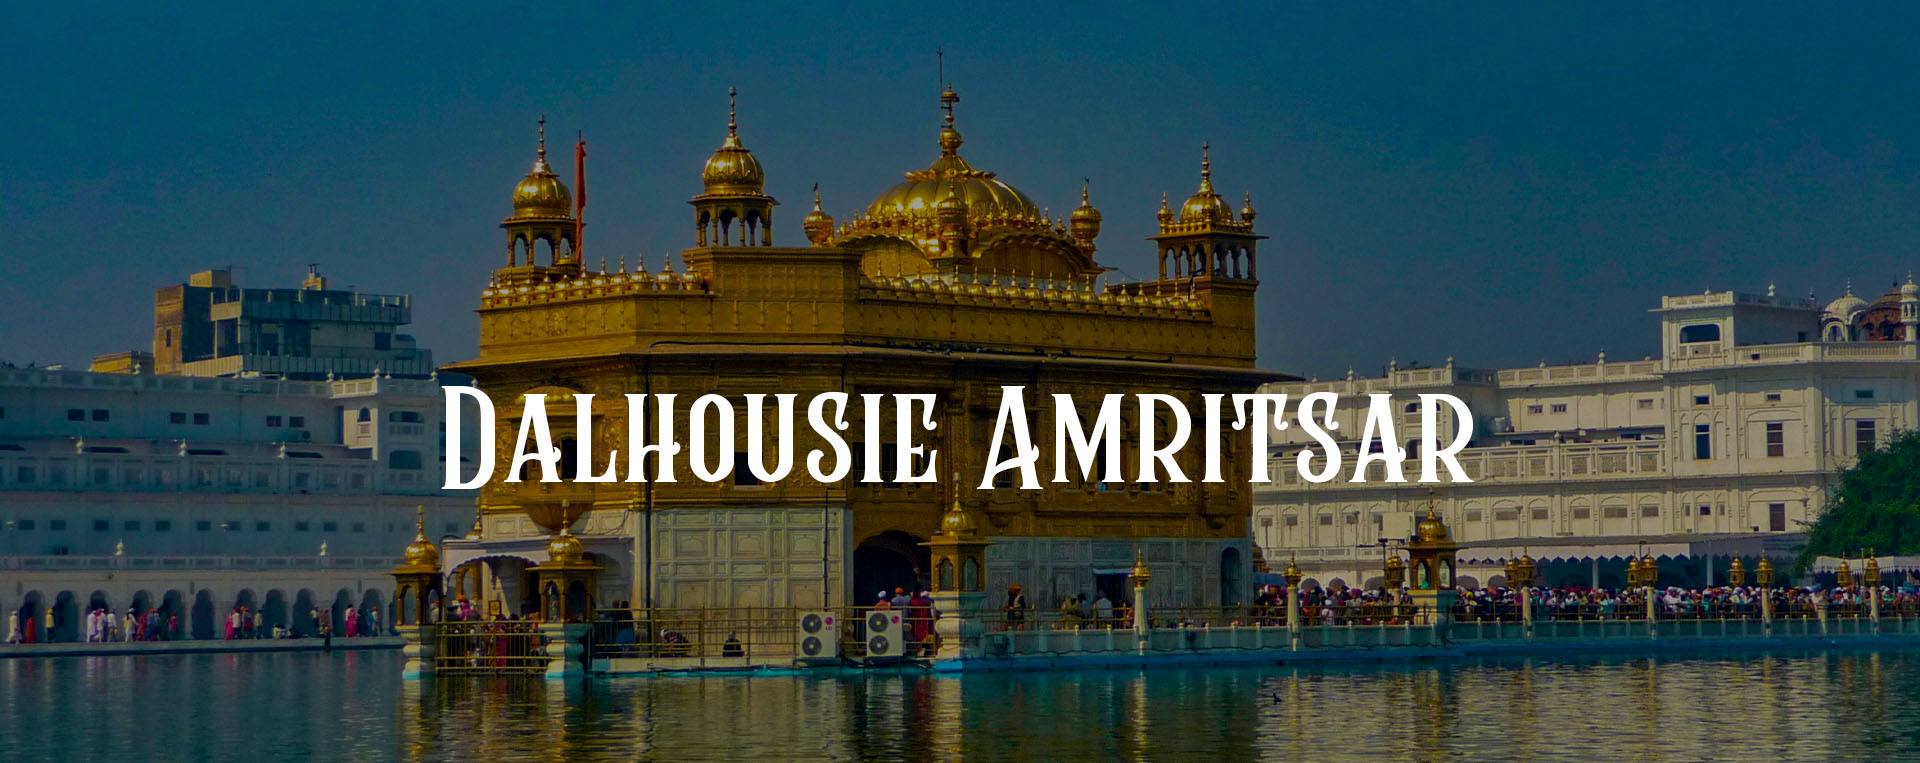 dalhousie-amritsar